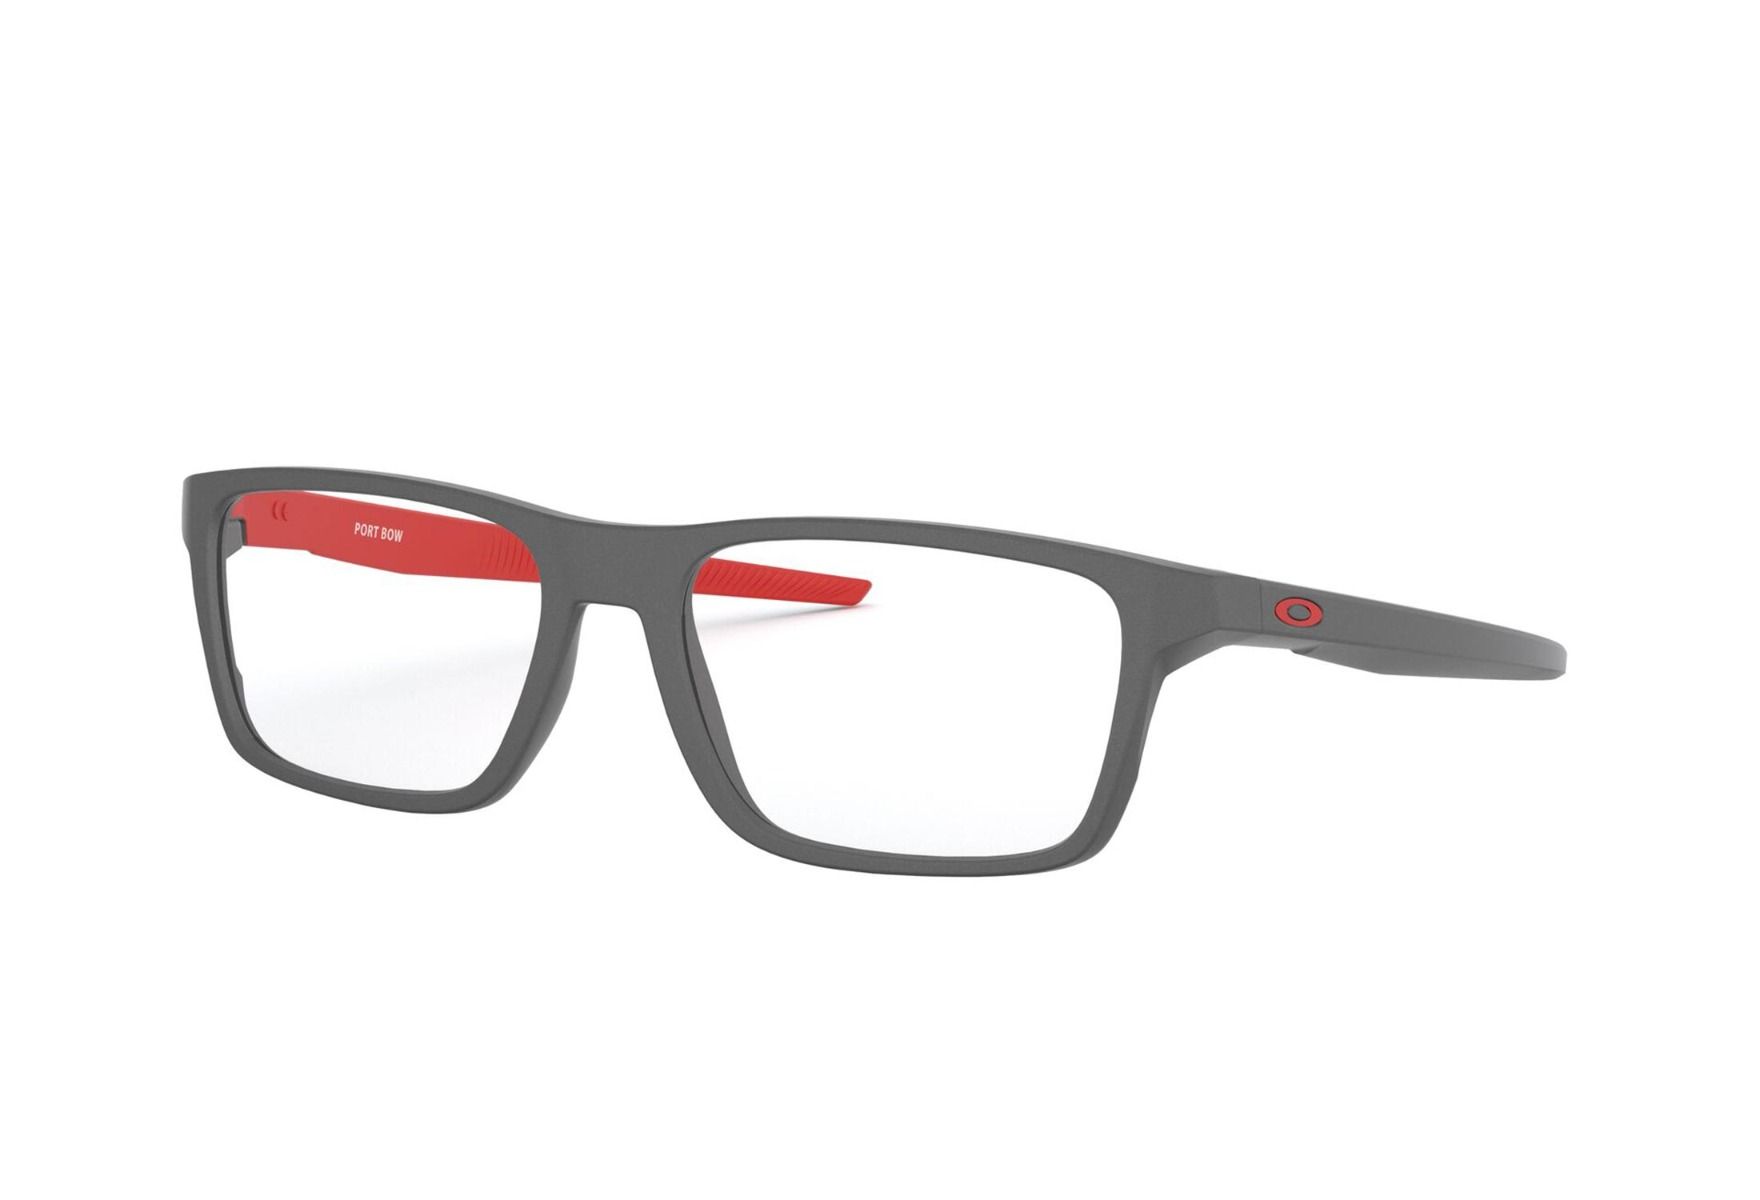 Oakley briller - Port Bow - Metall, Large Hel ramme i Plast - Rektangulære